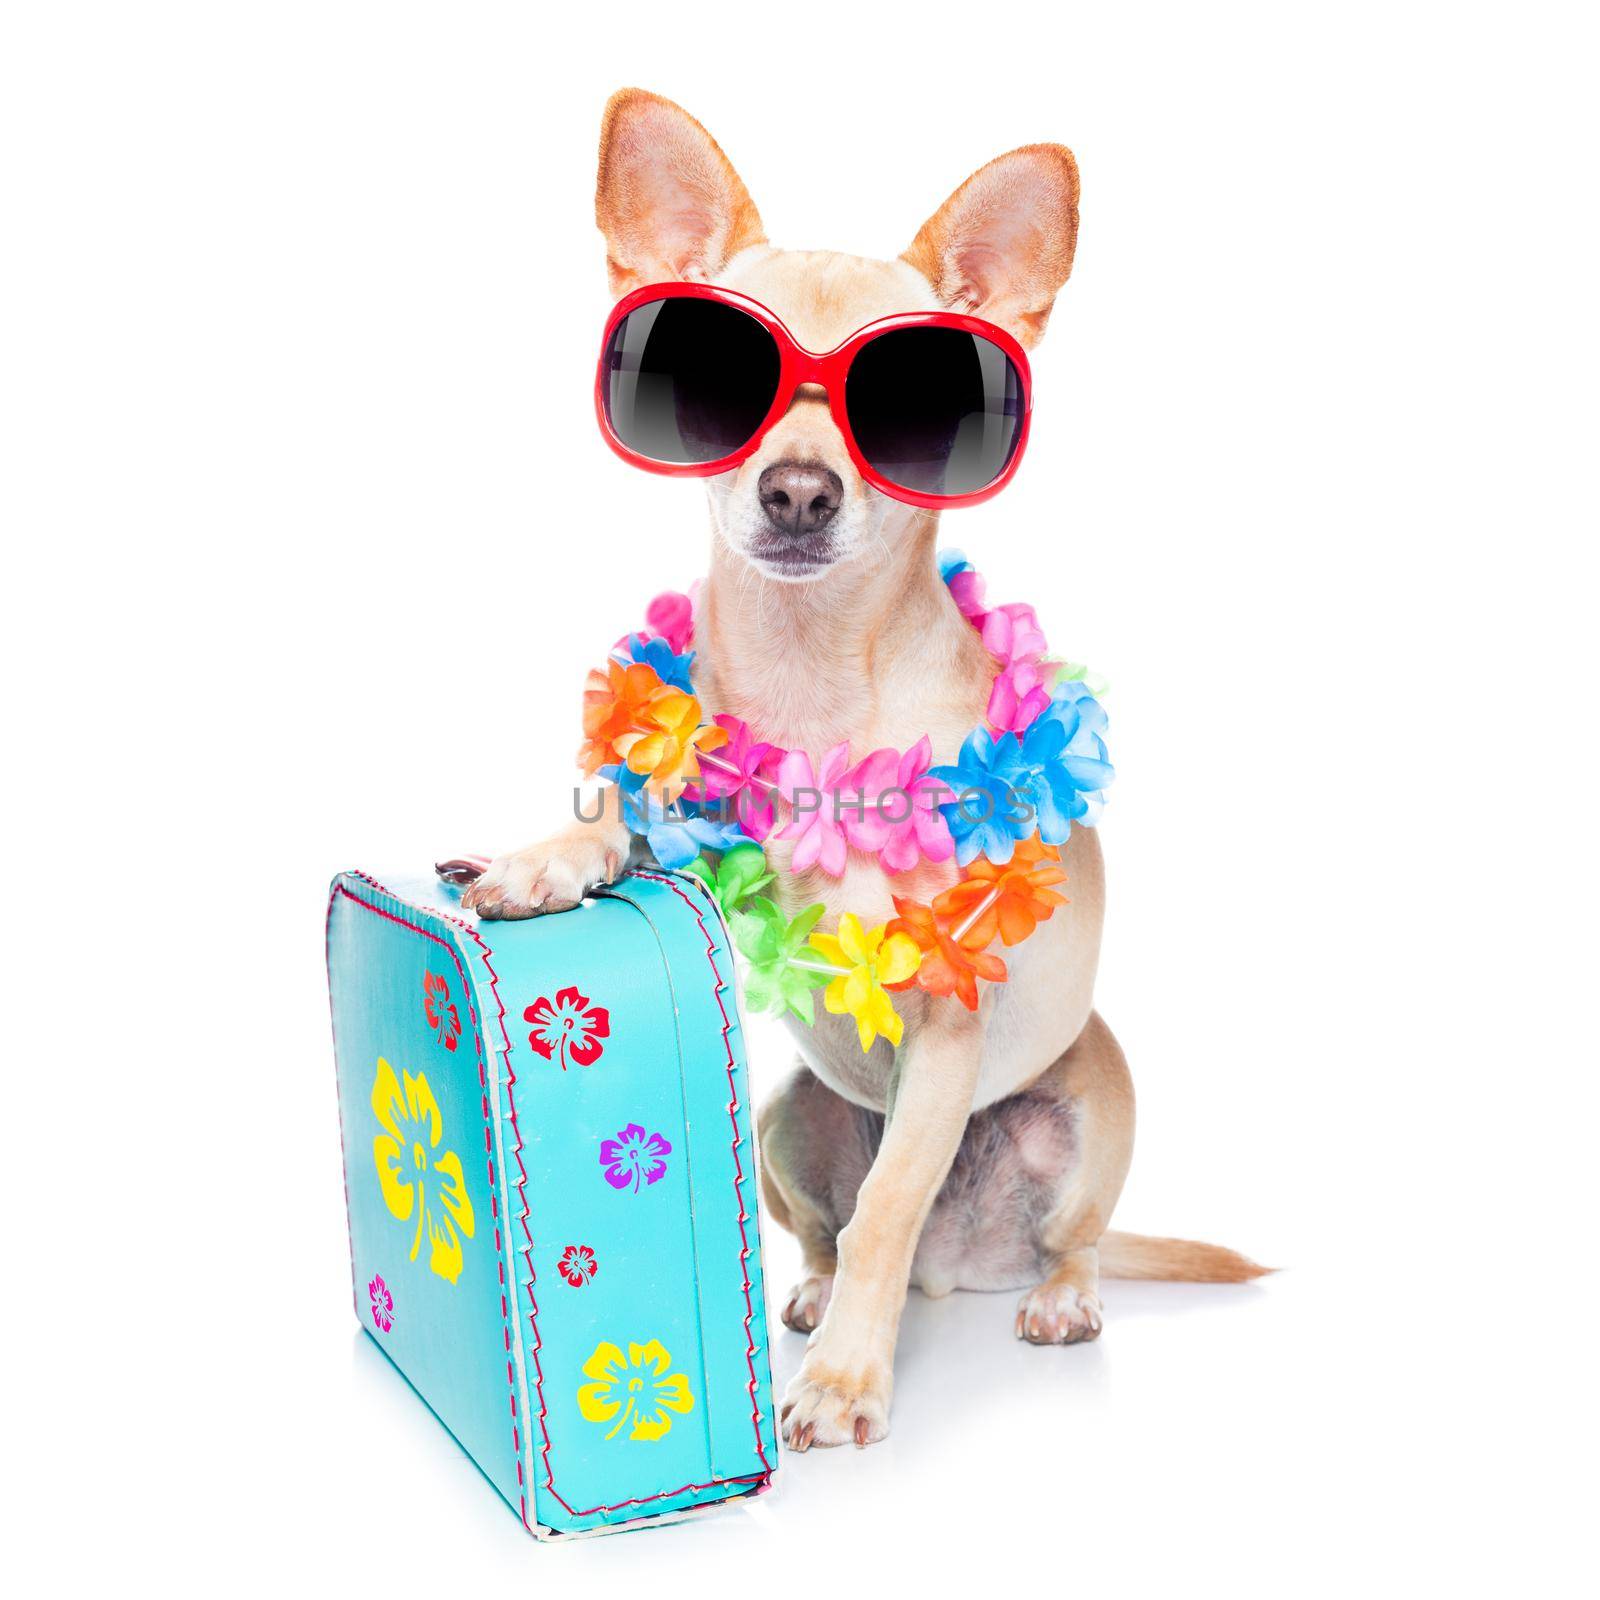 dog summer holidays by Brosch